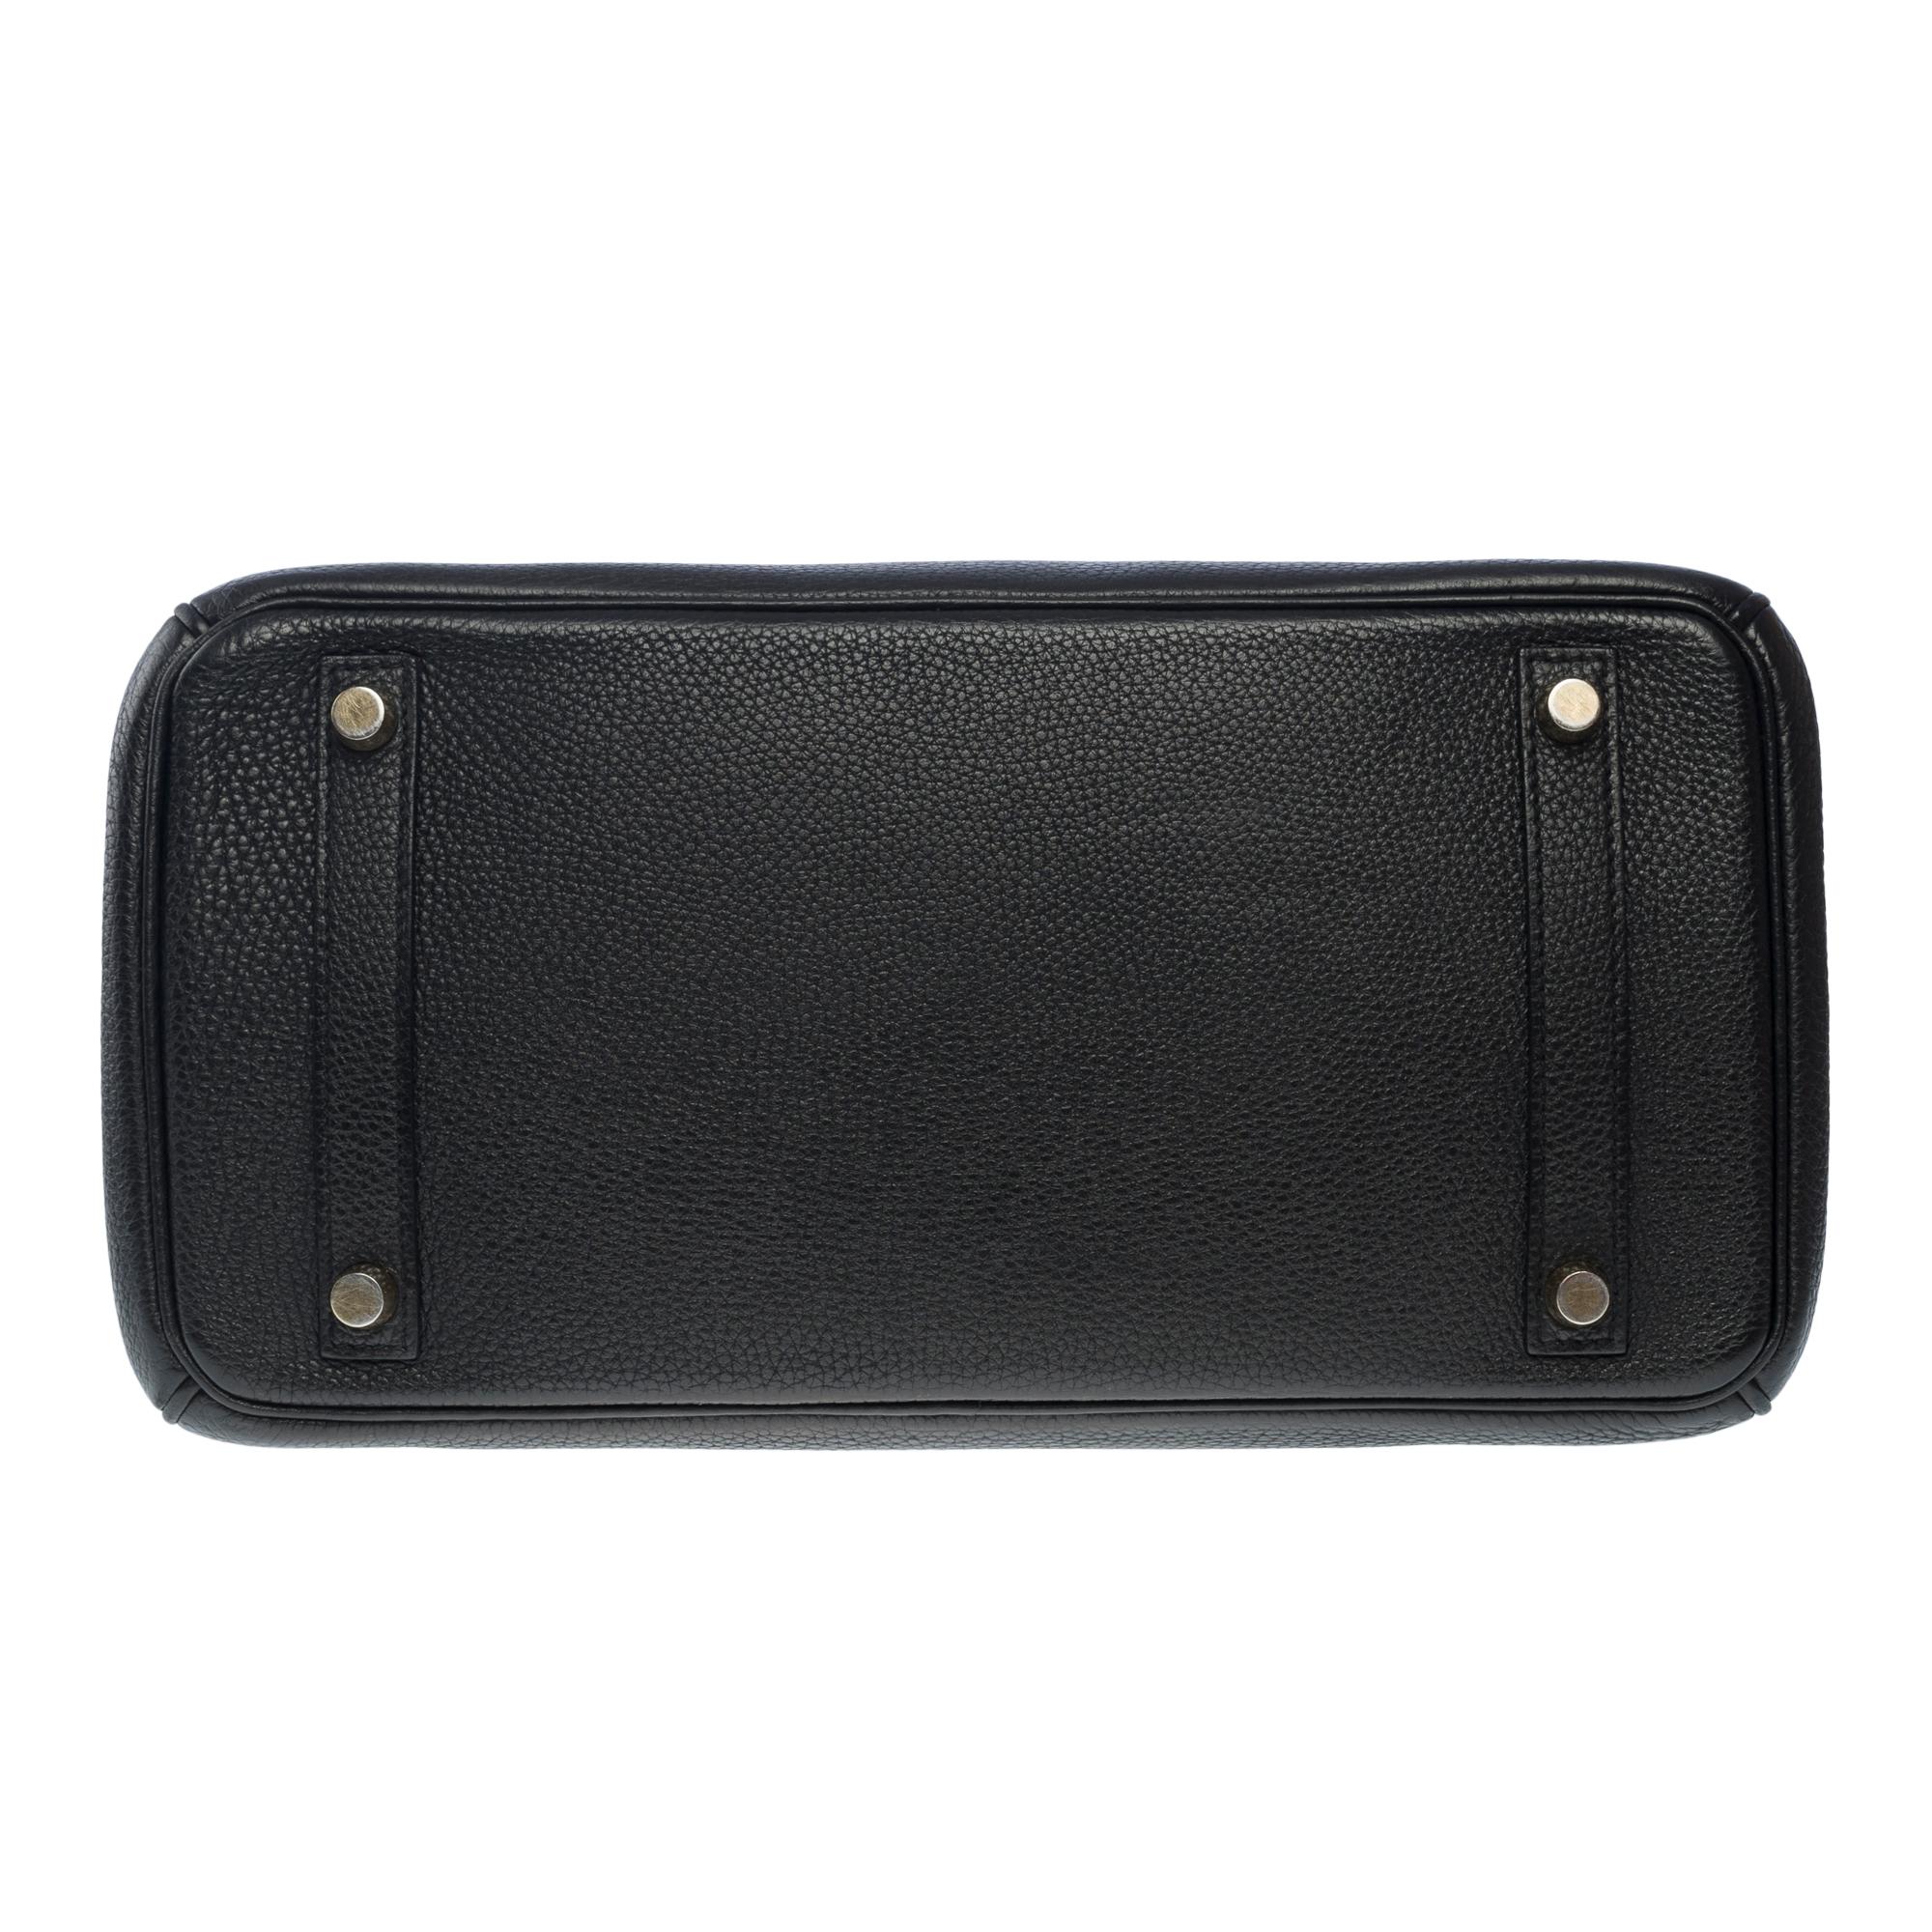 Stunning Hermes Birkin 30 handbag in Black Togo leather, GHW 8